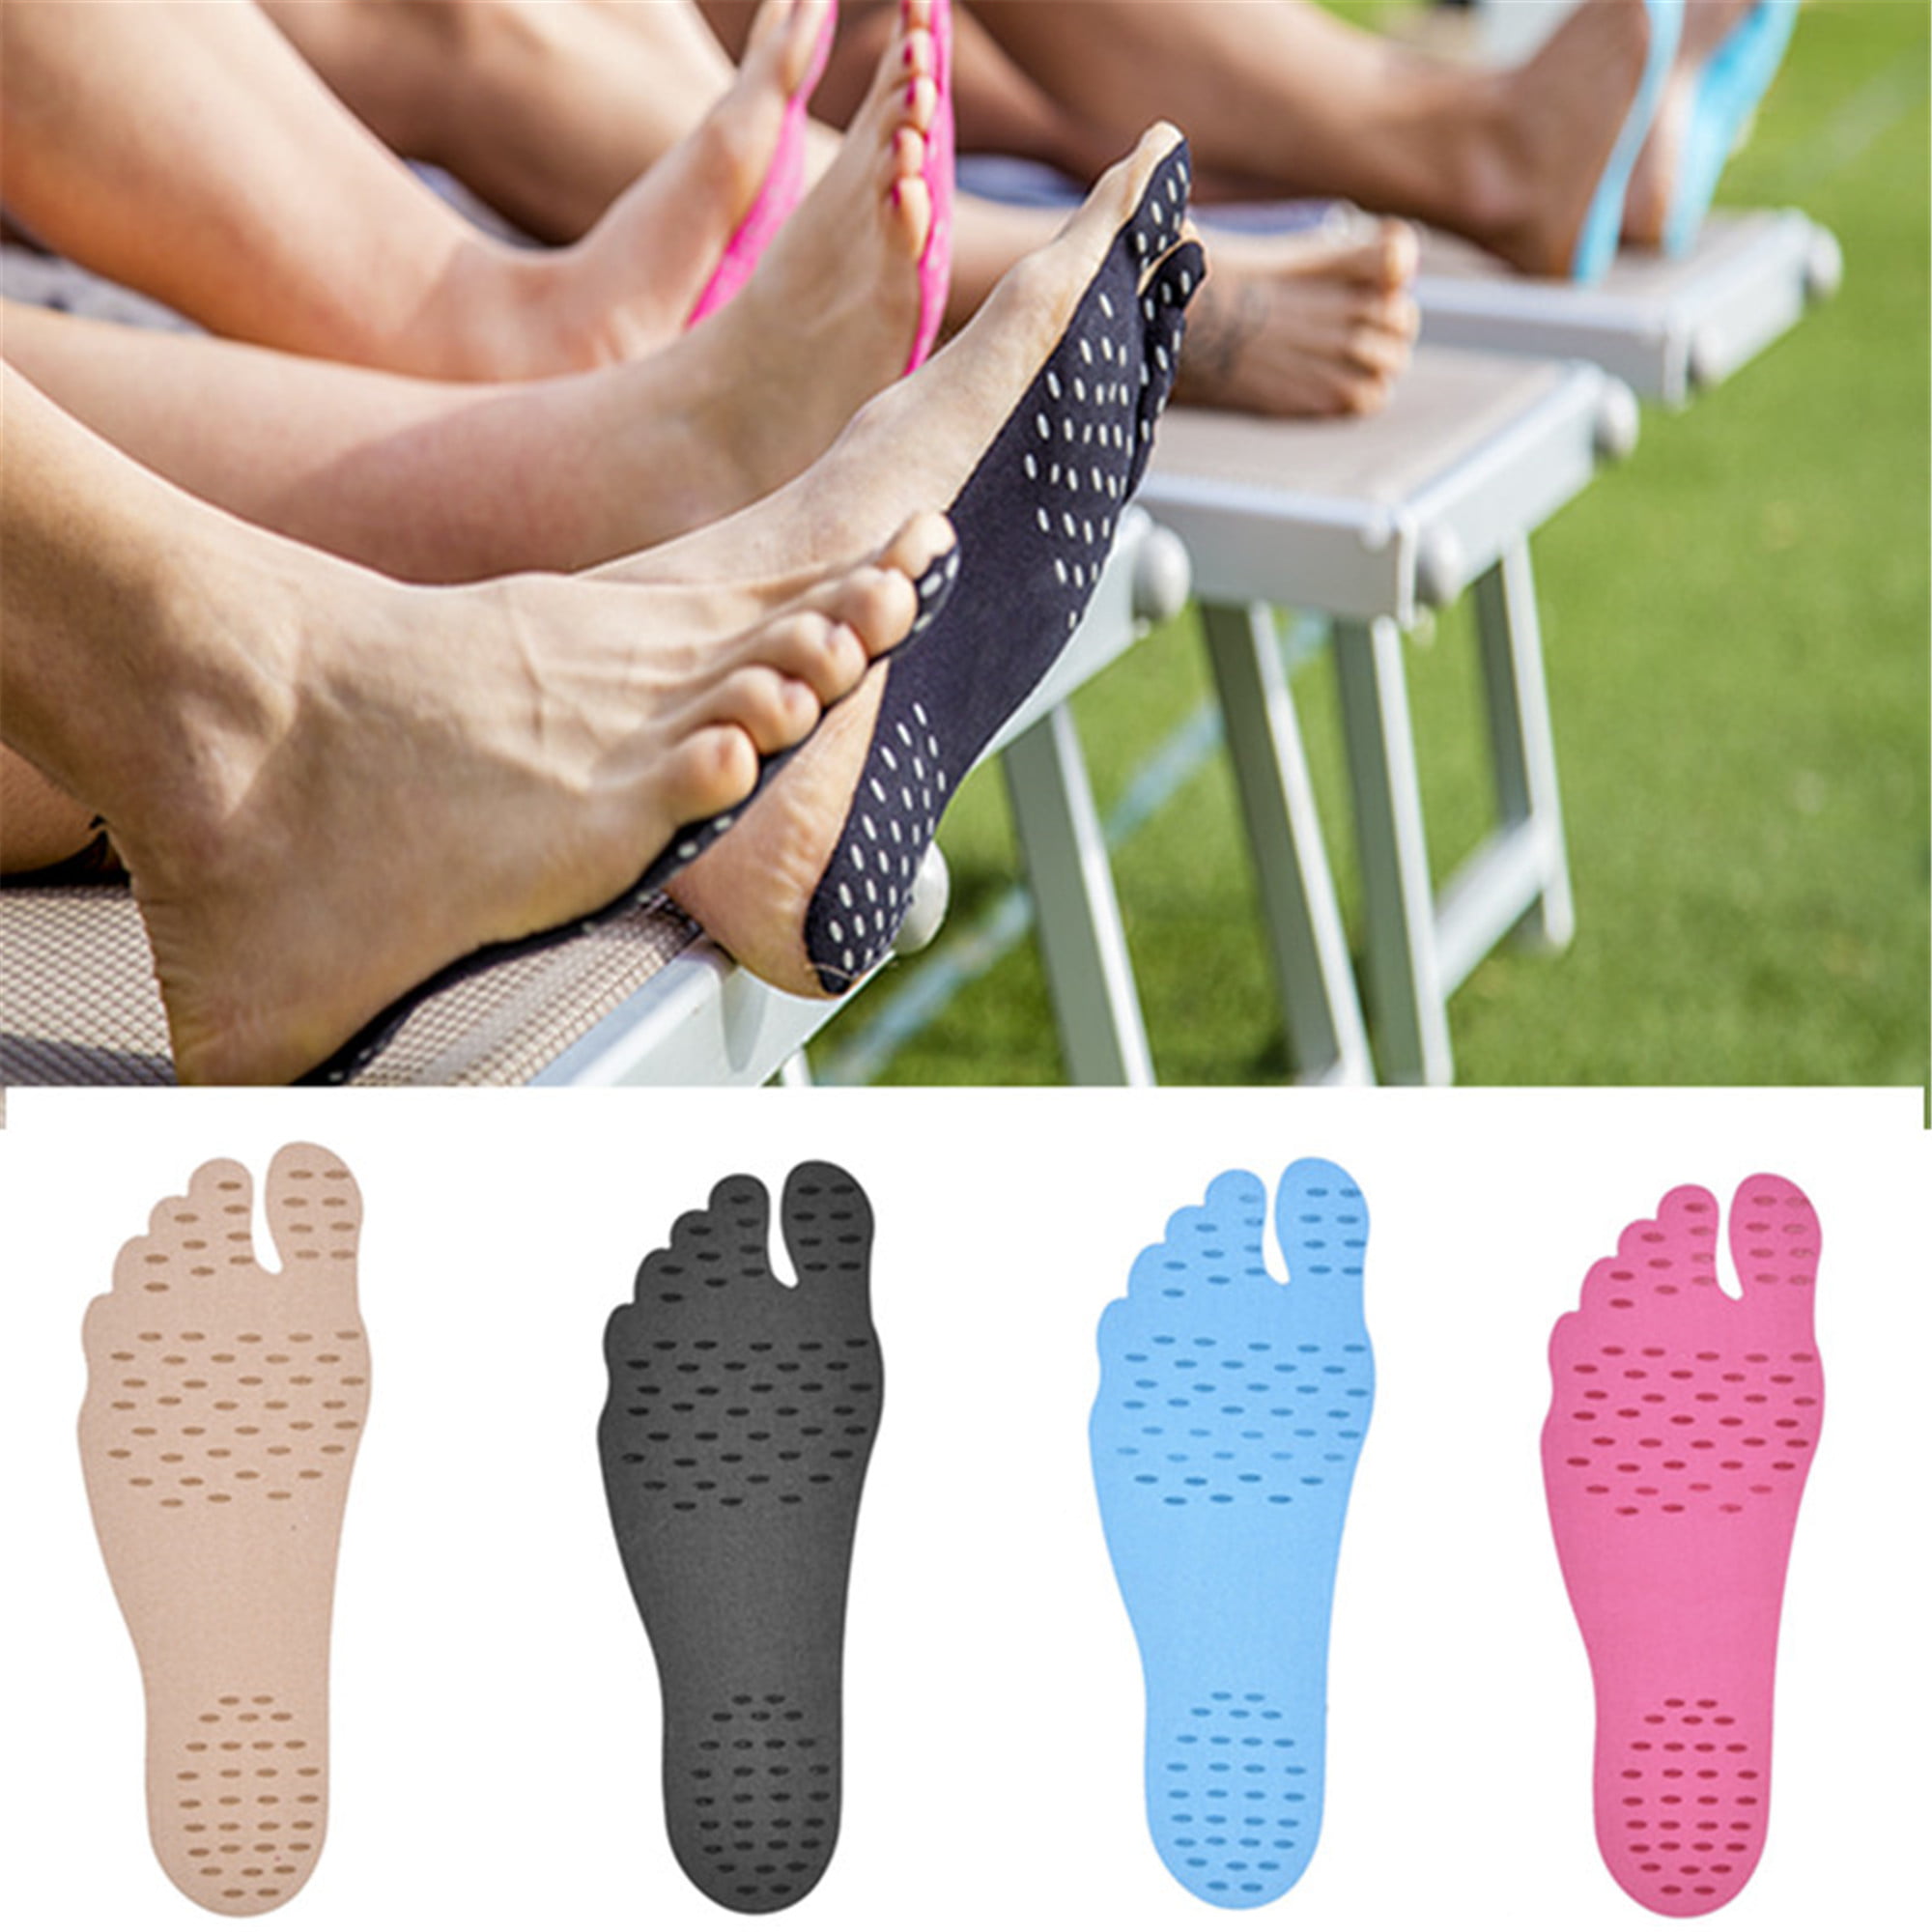 Nakefit Feet Sticker Shoes Adhesive 